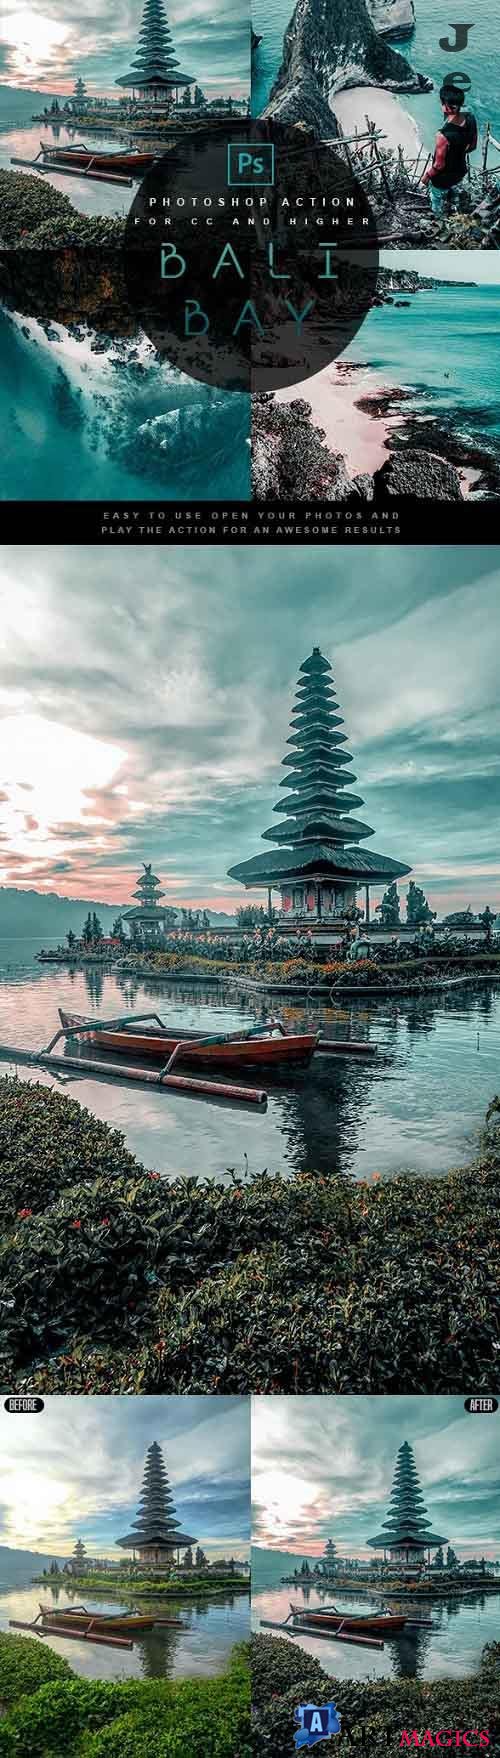 GraphicRiver - Bali Bay - Photoshop Action 28295208